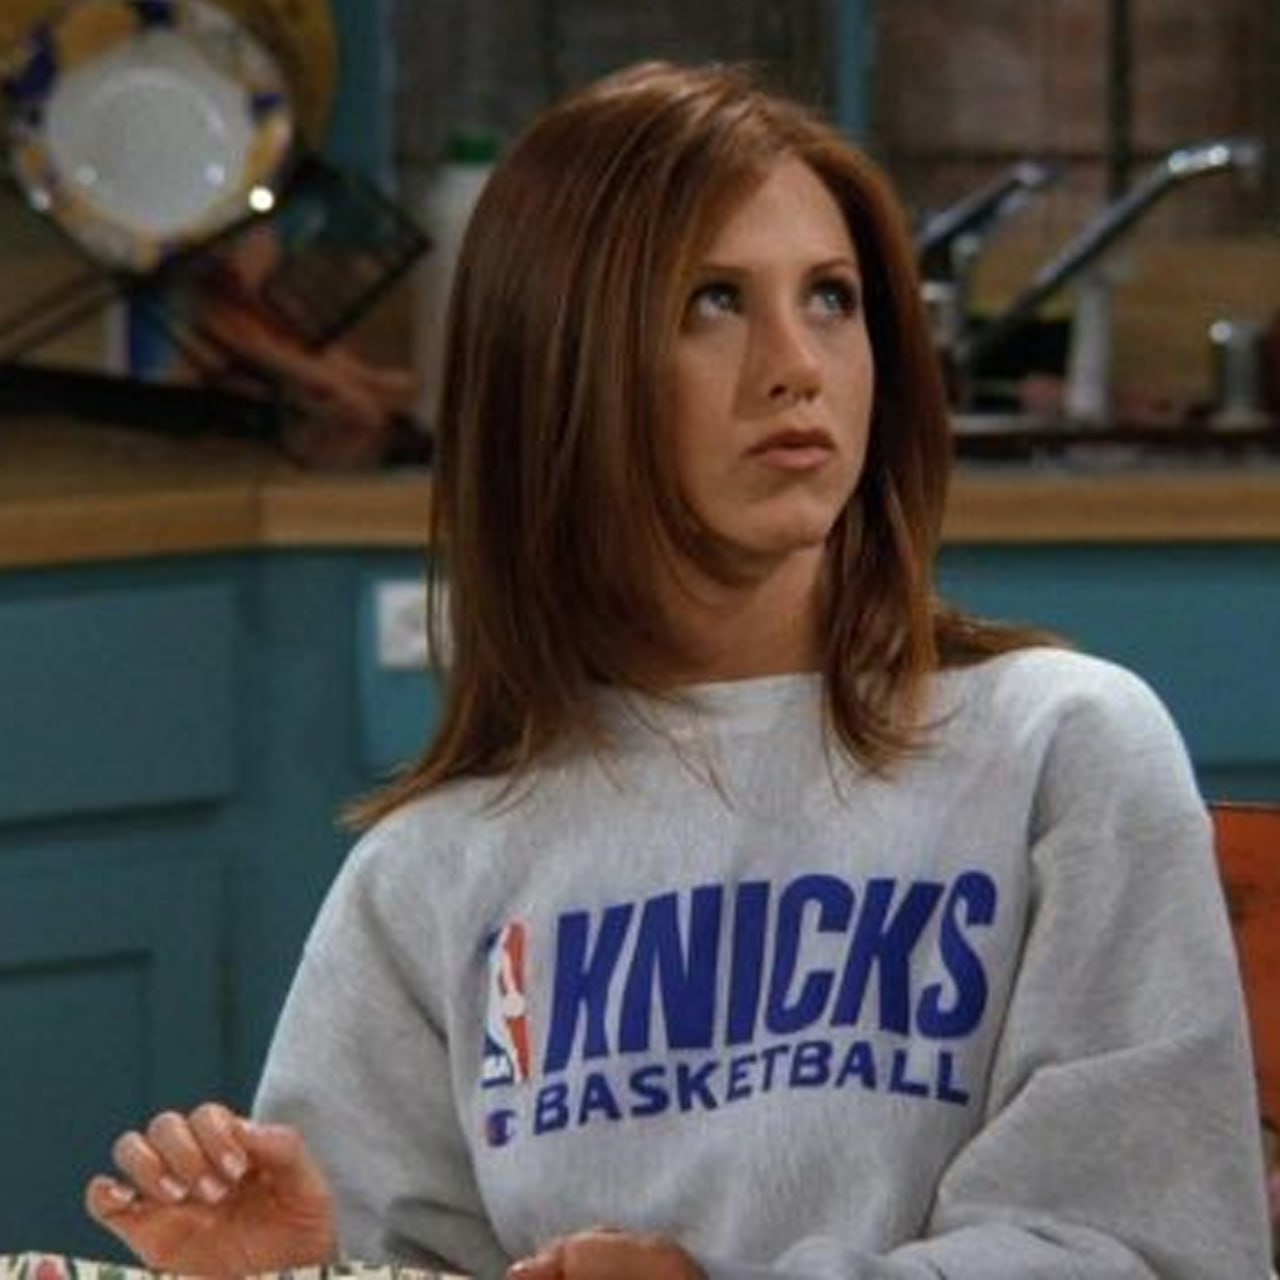 Knicks Basketball Friends Inspired Crewneck Sweatshirt